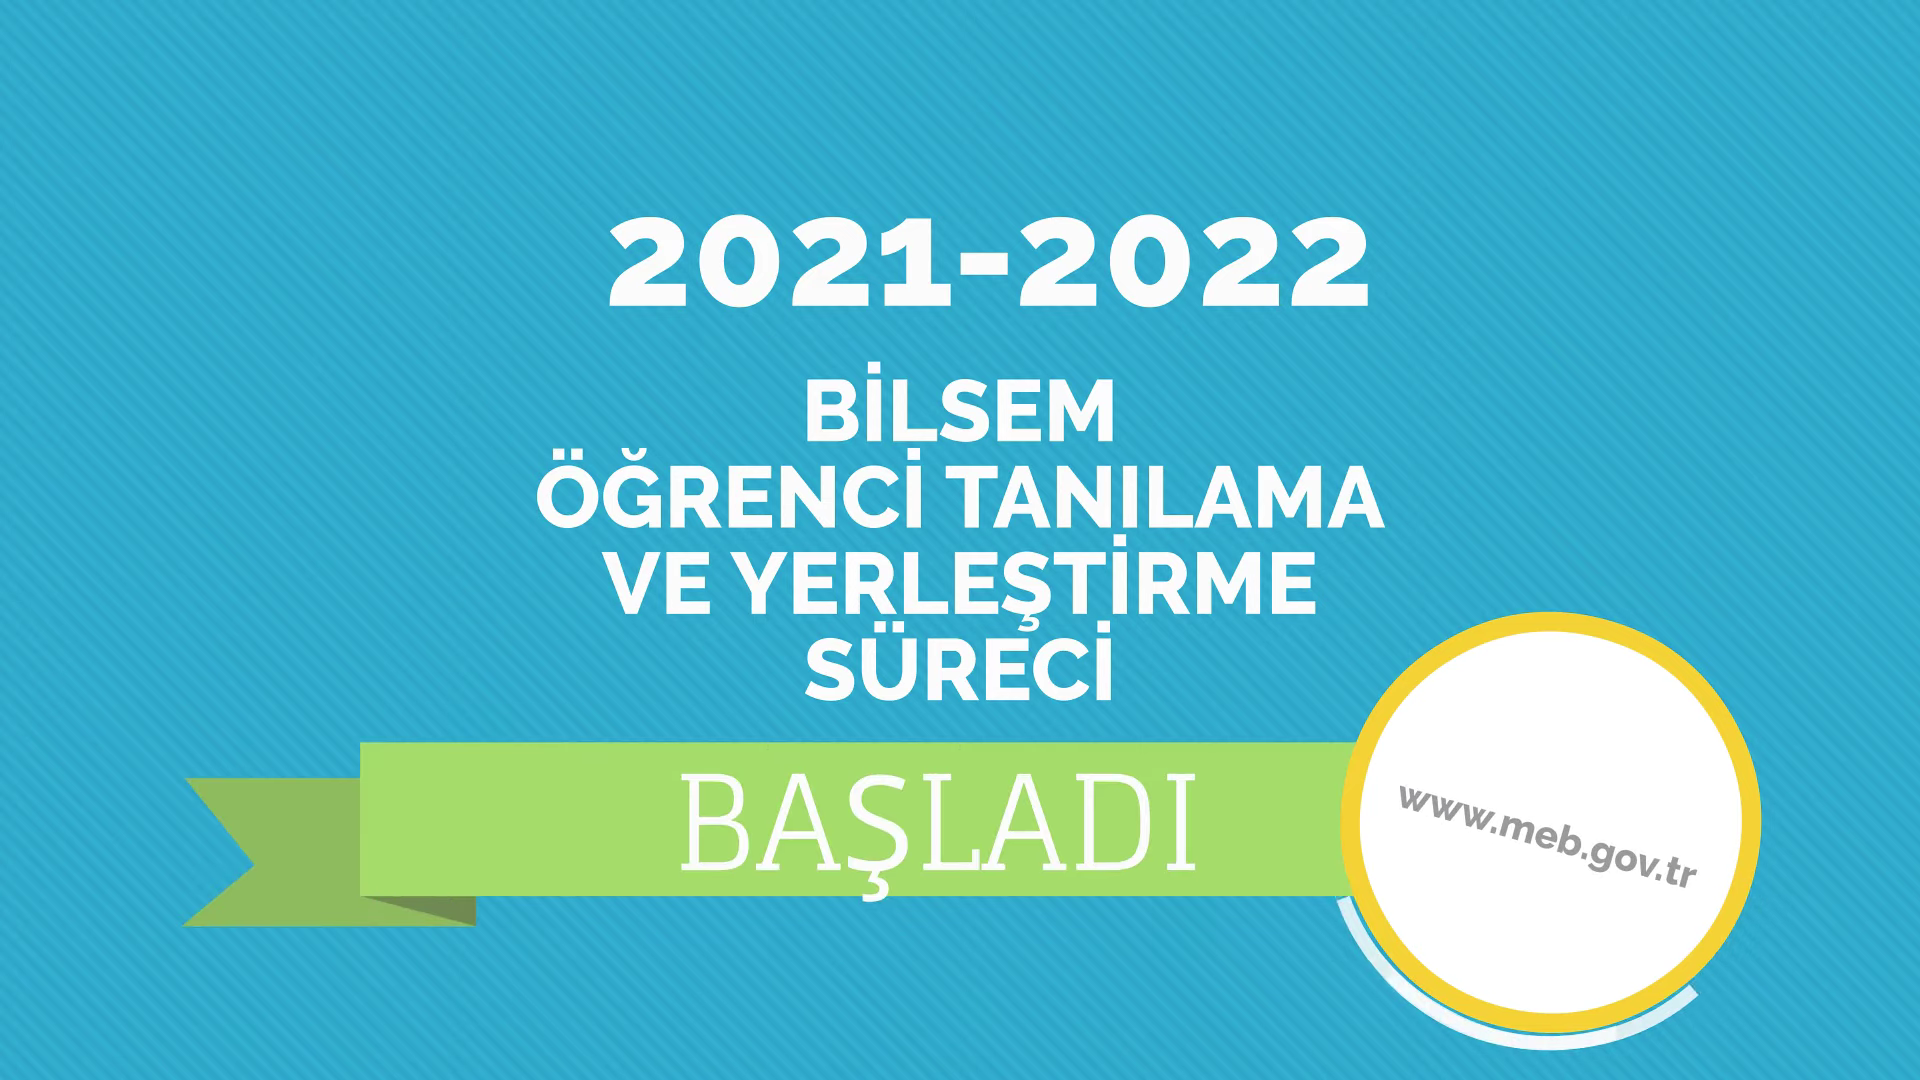  2021-2022 BLSEM renci Tanlama Sreci Tantm